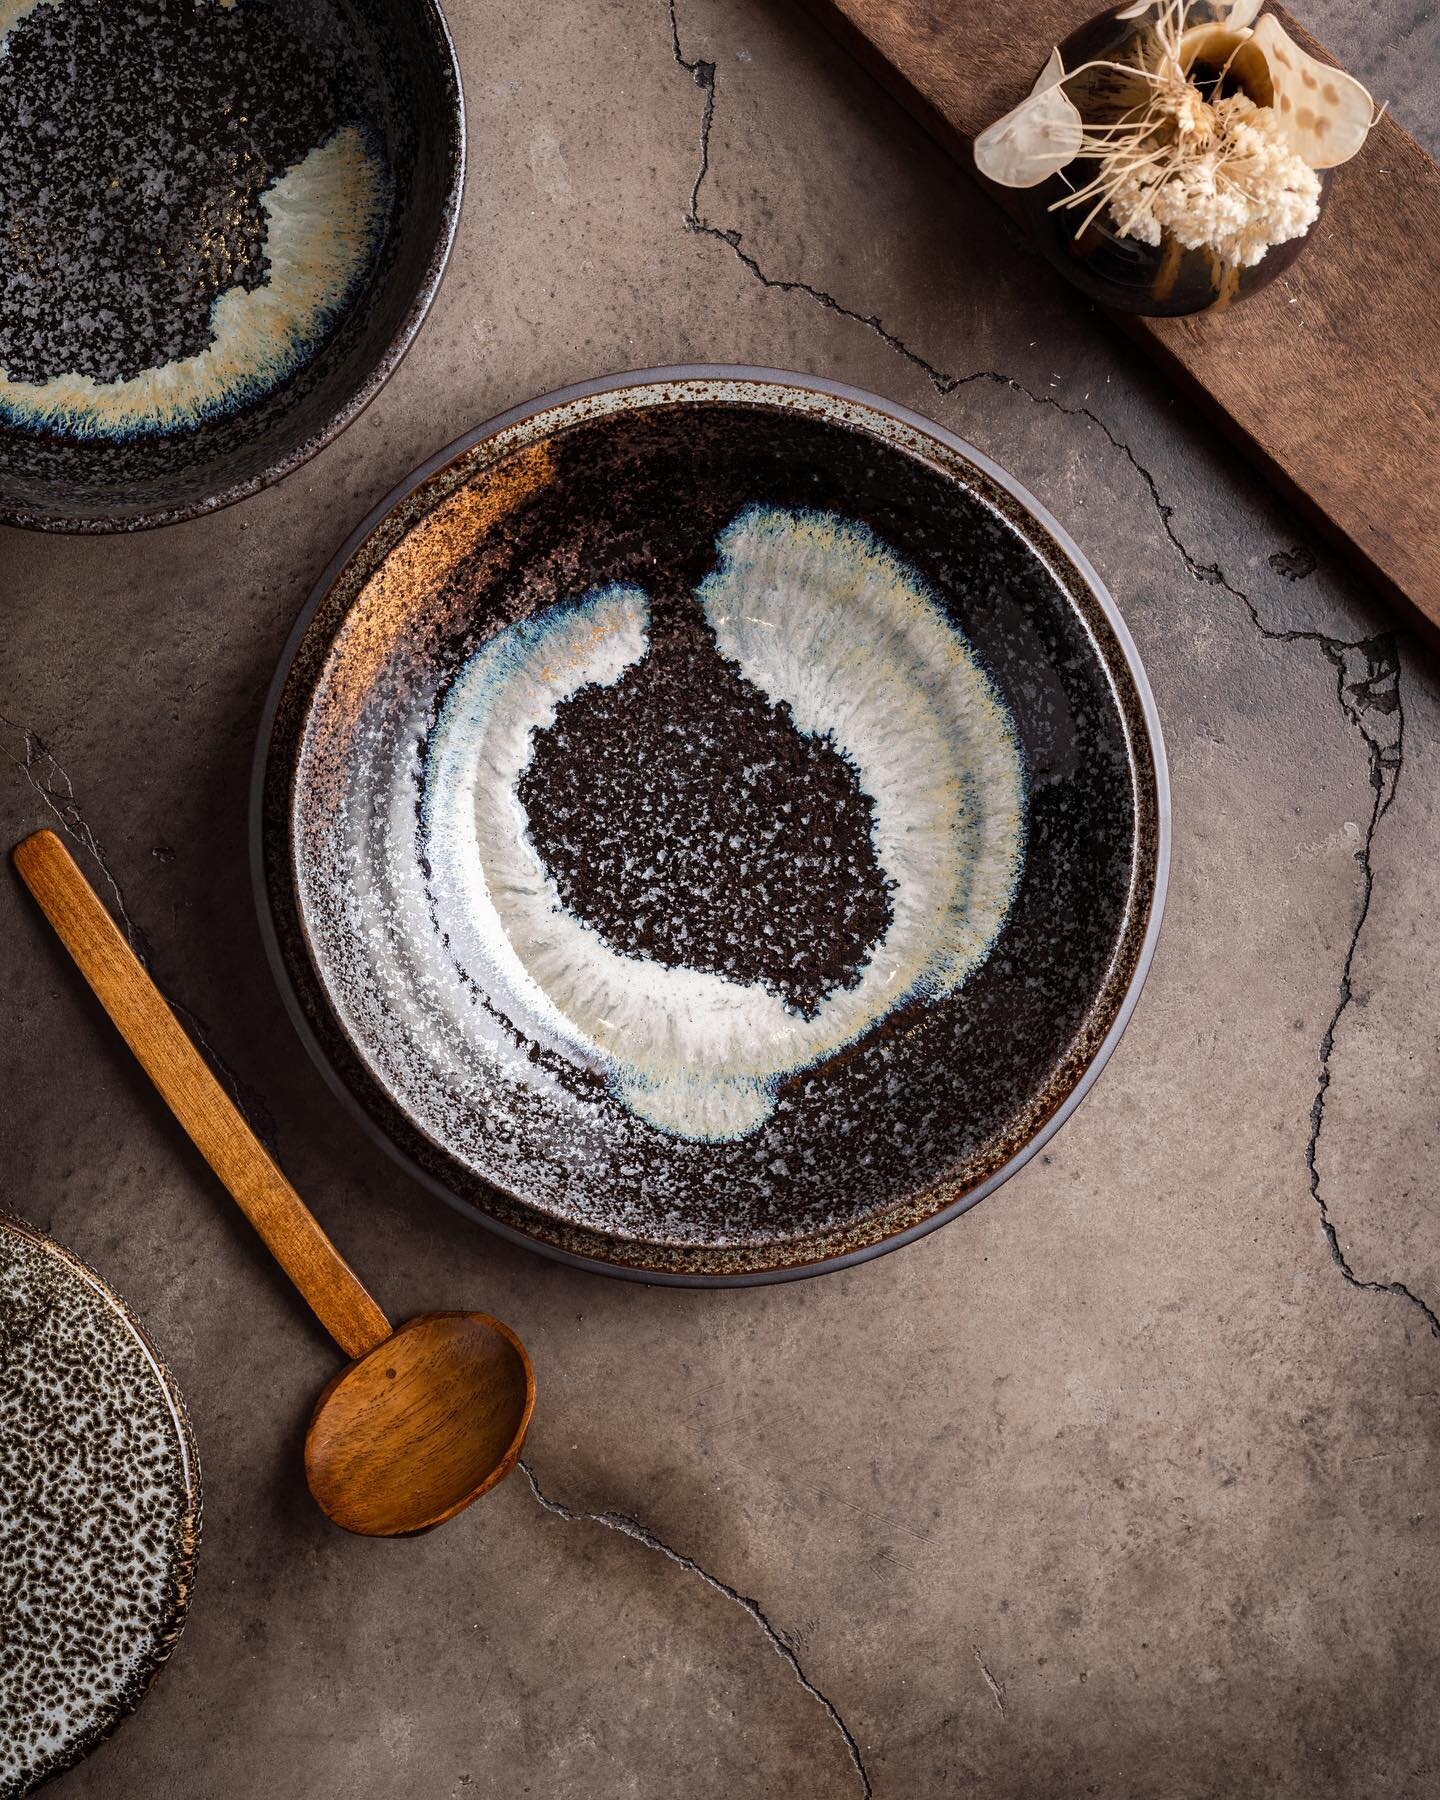 Bowl in ceramic directly imported from Japan.
.
#b2b #supplier #japanese #ceramics #porcelain #fournisseur #collection #gammes #bols #vaisselle #artdelatable #tableware #homeware #decoration #yummy #assiette #bois #artisan #artisanat #theiere #tea #j